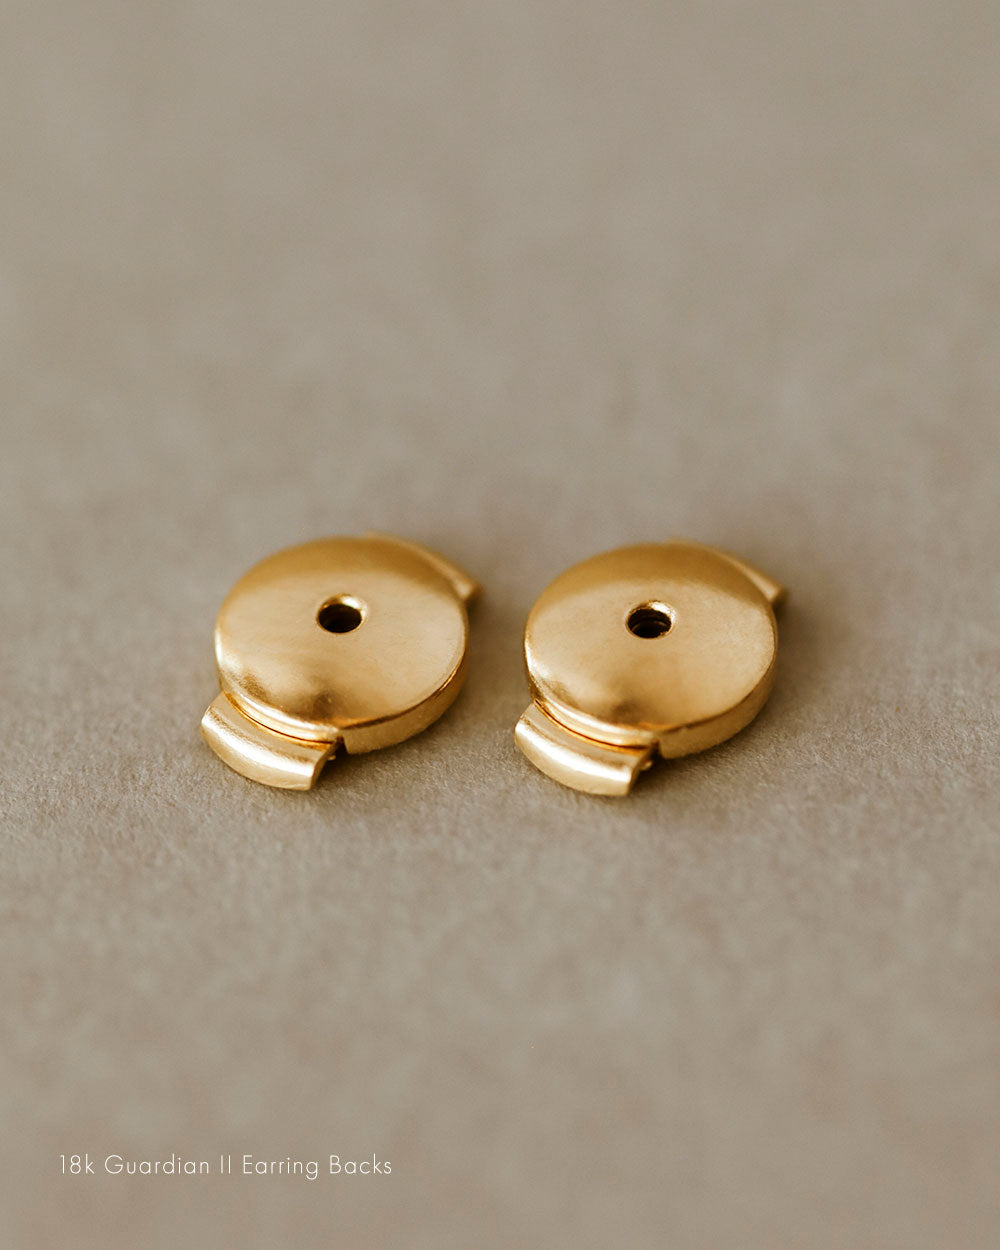 18k gold guardian II earring backs george rings